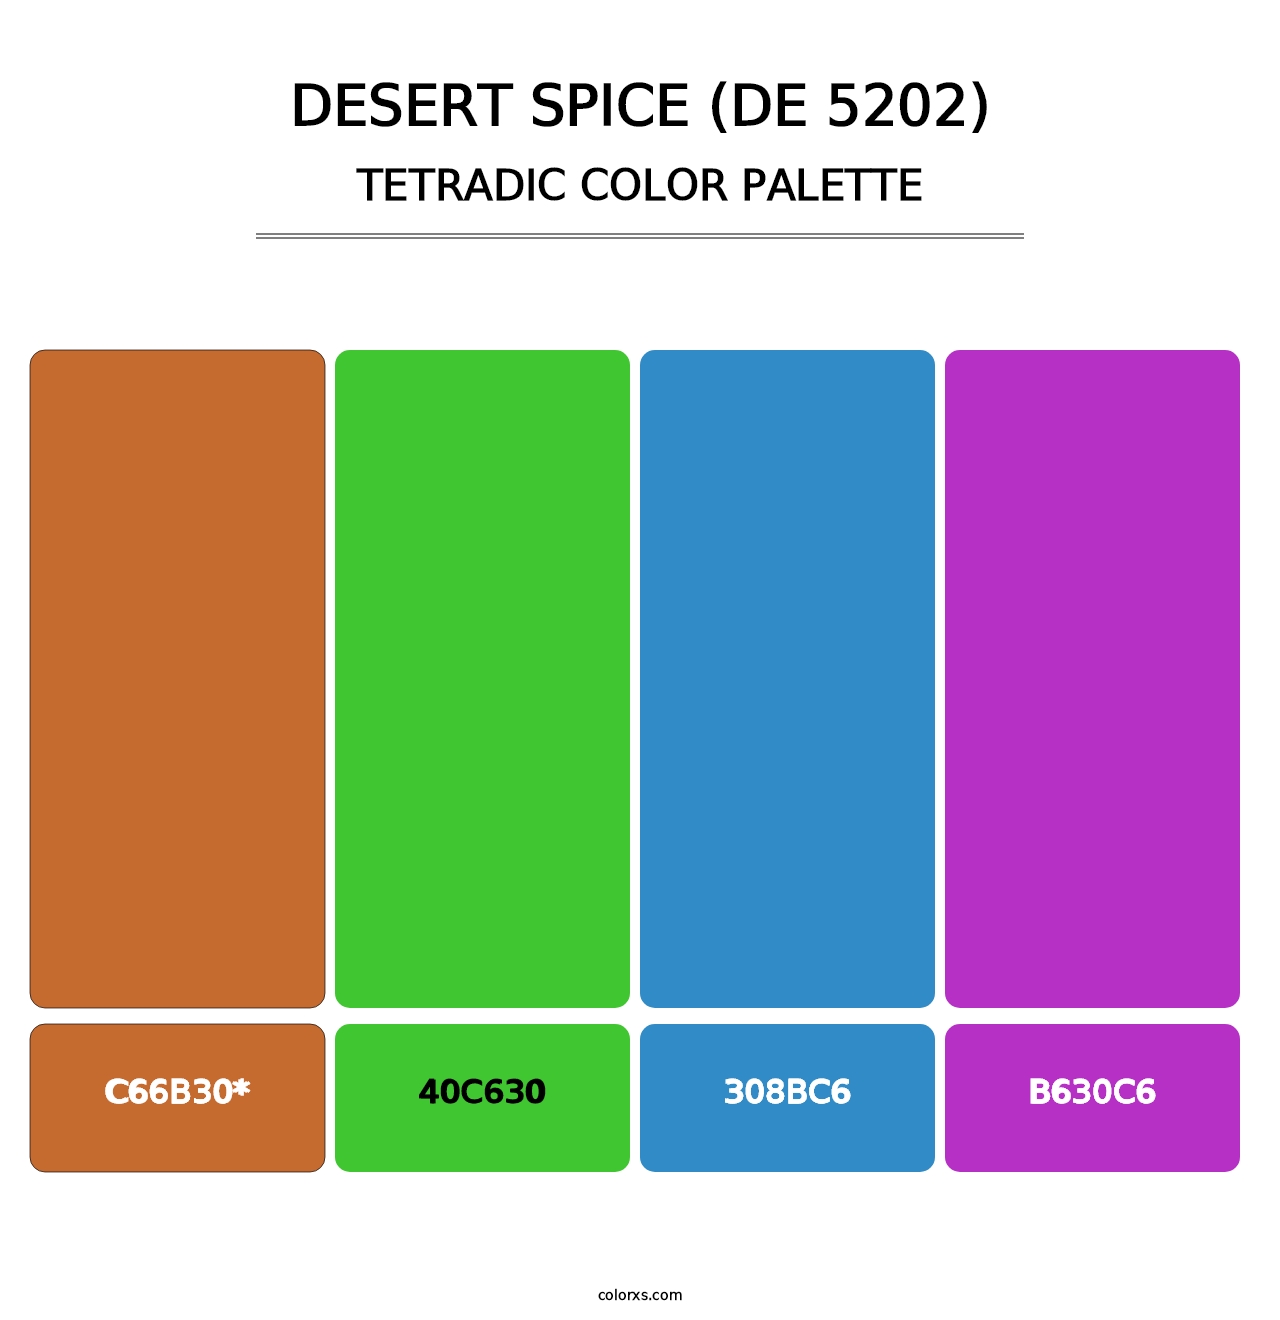 Desert Spice (DE 5202) - Tetradic Color Palette